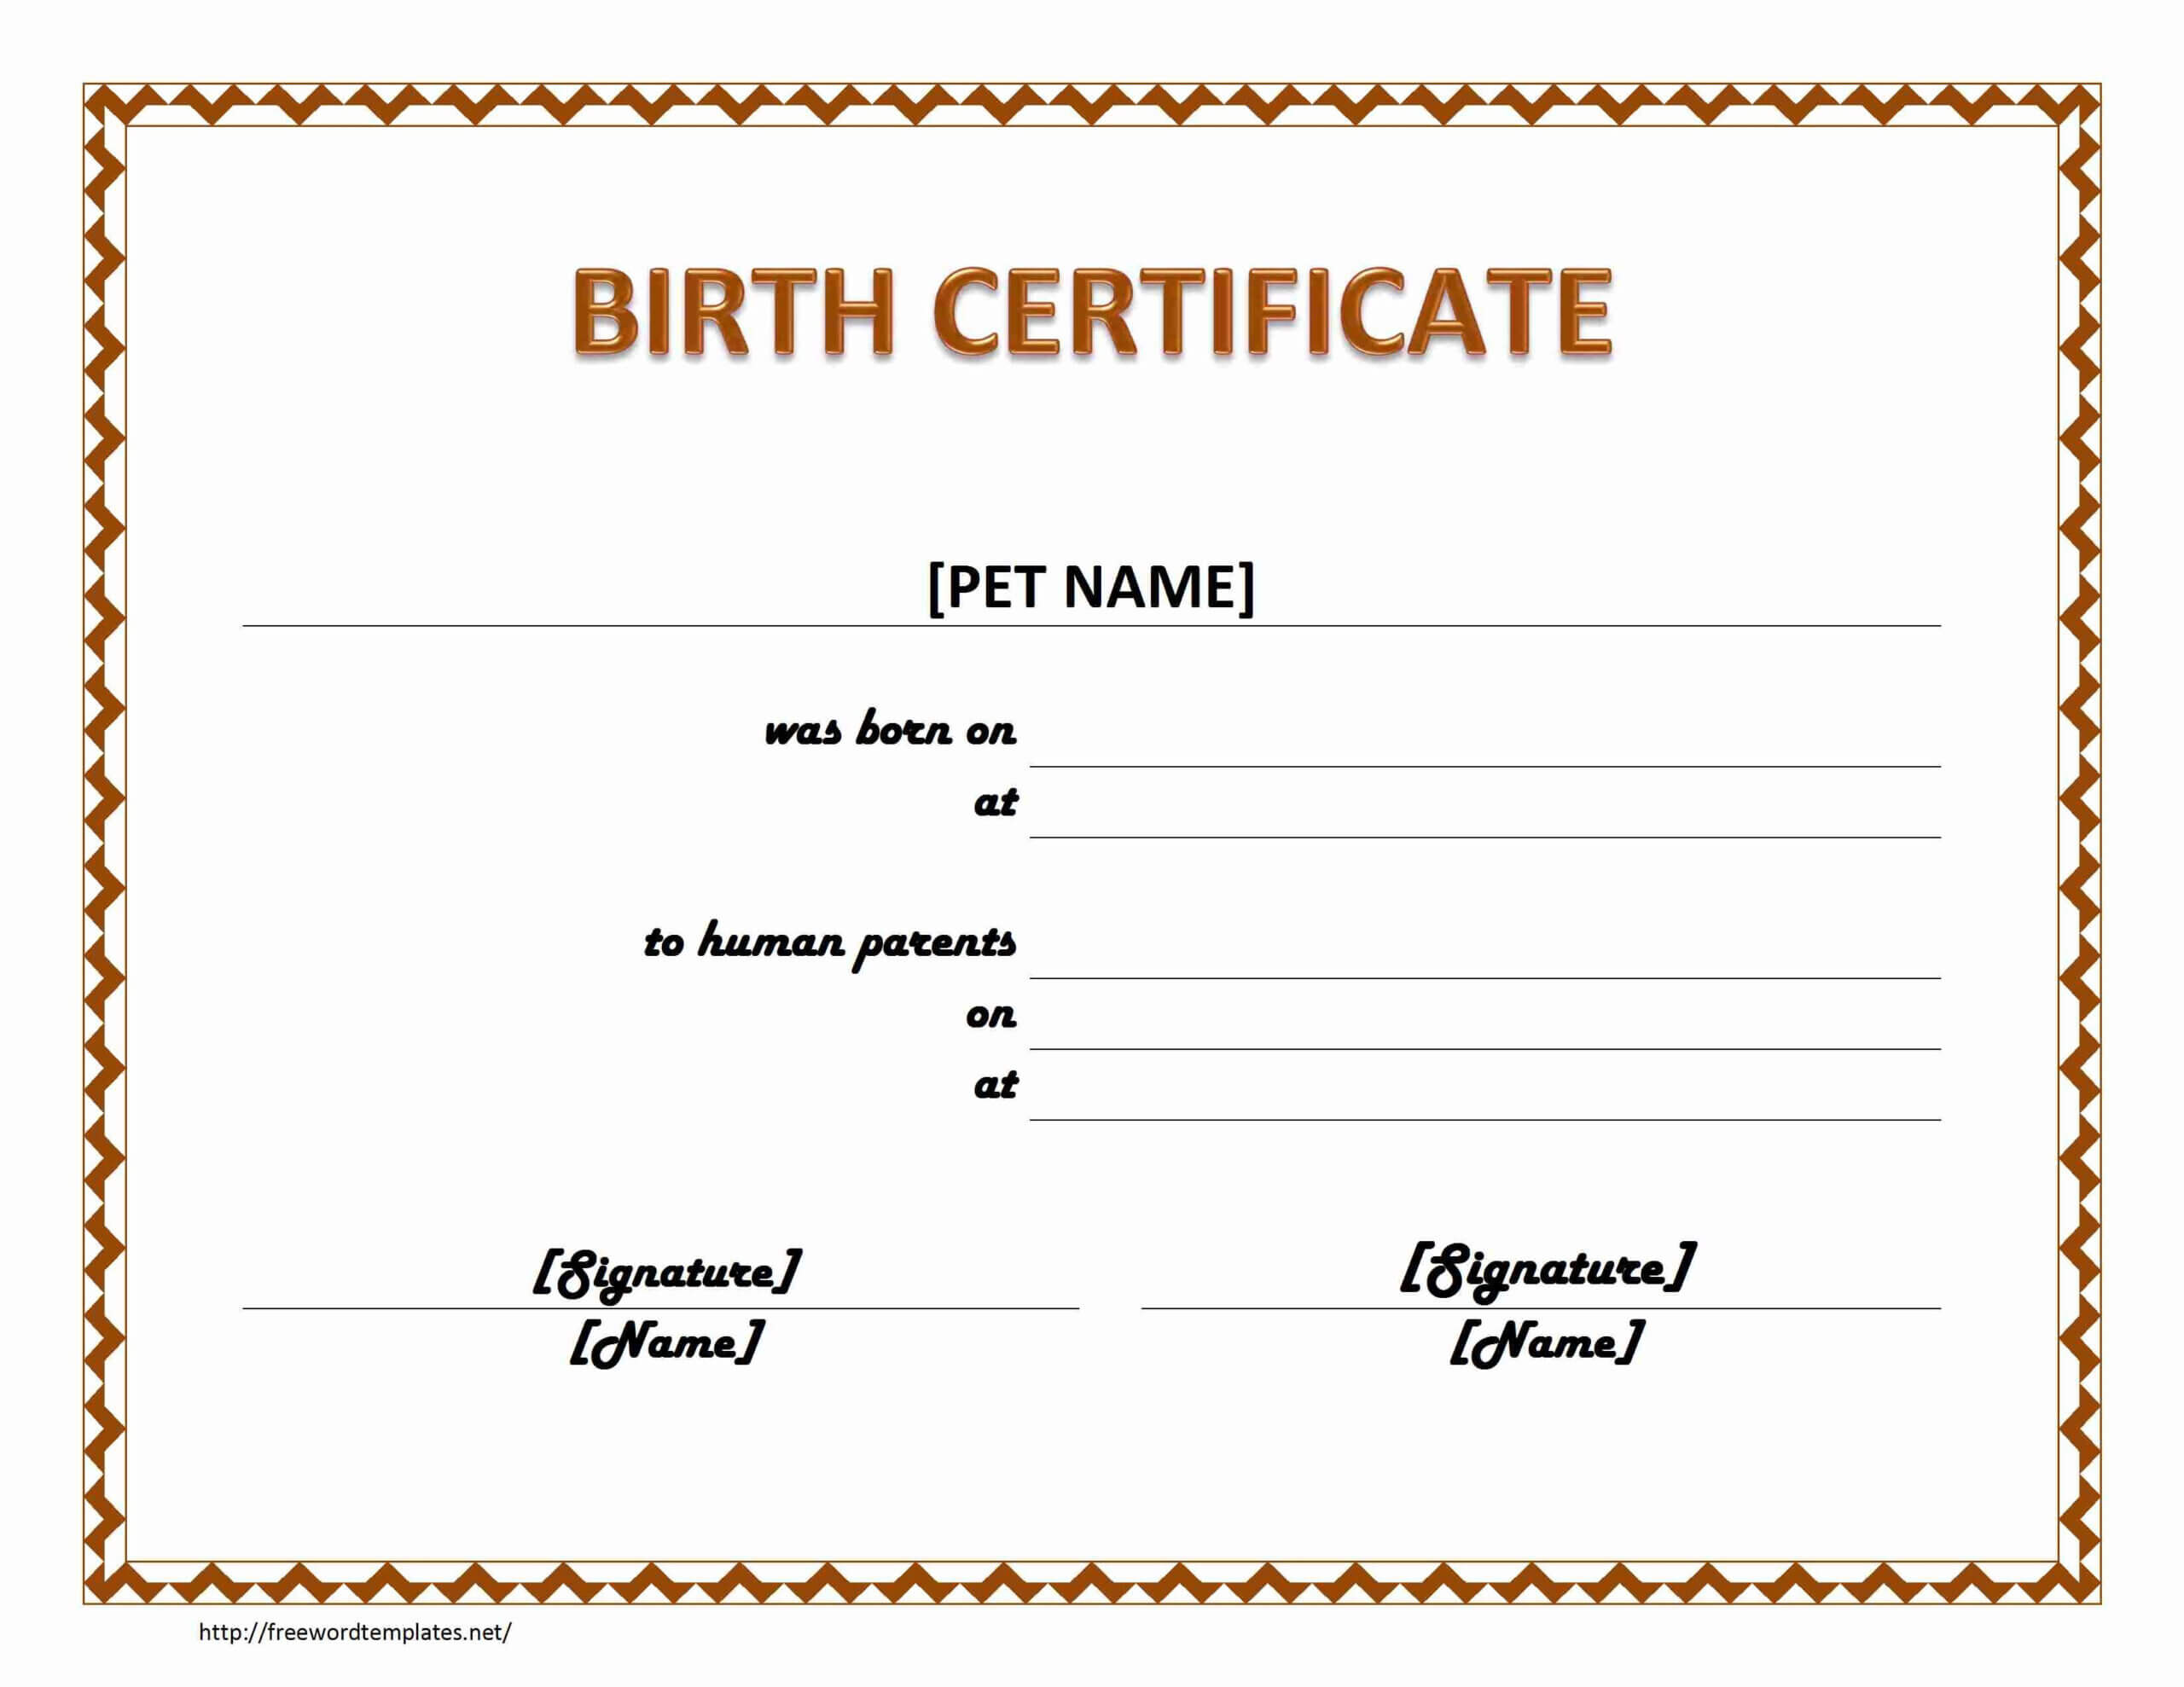 Pet Birth Certificate Maker | Pet Birth Certificate For Word For Editable Birth Certificate Template